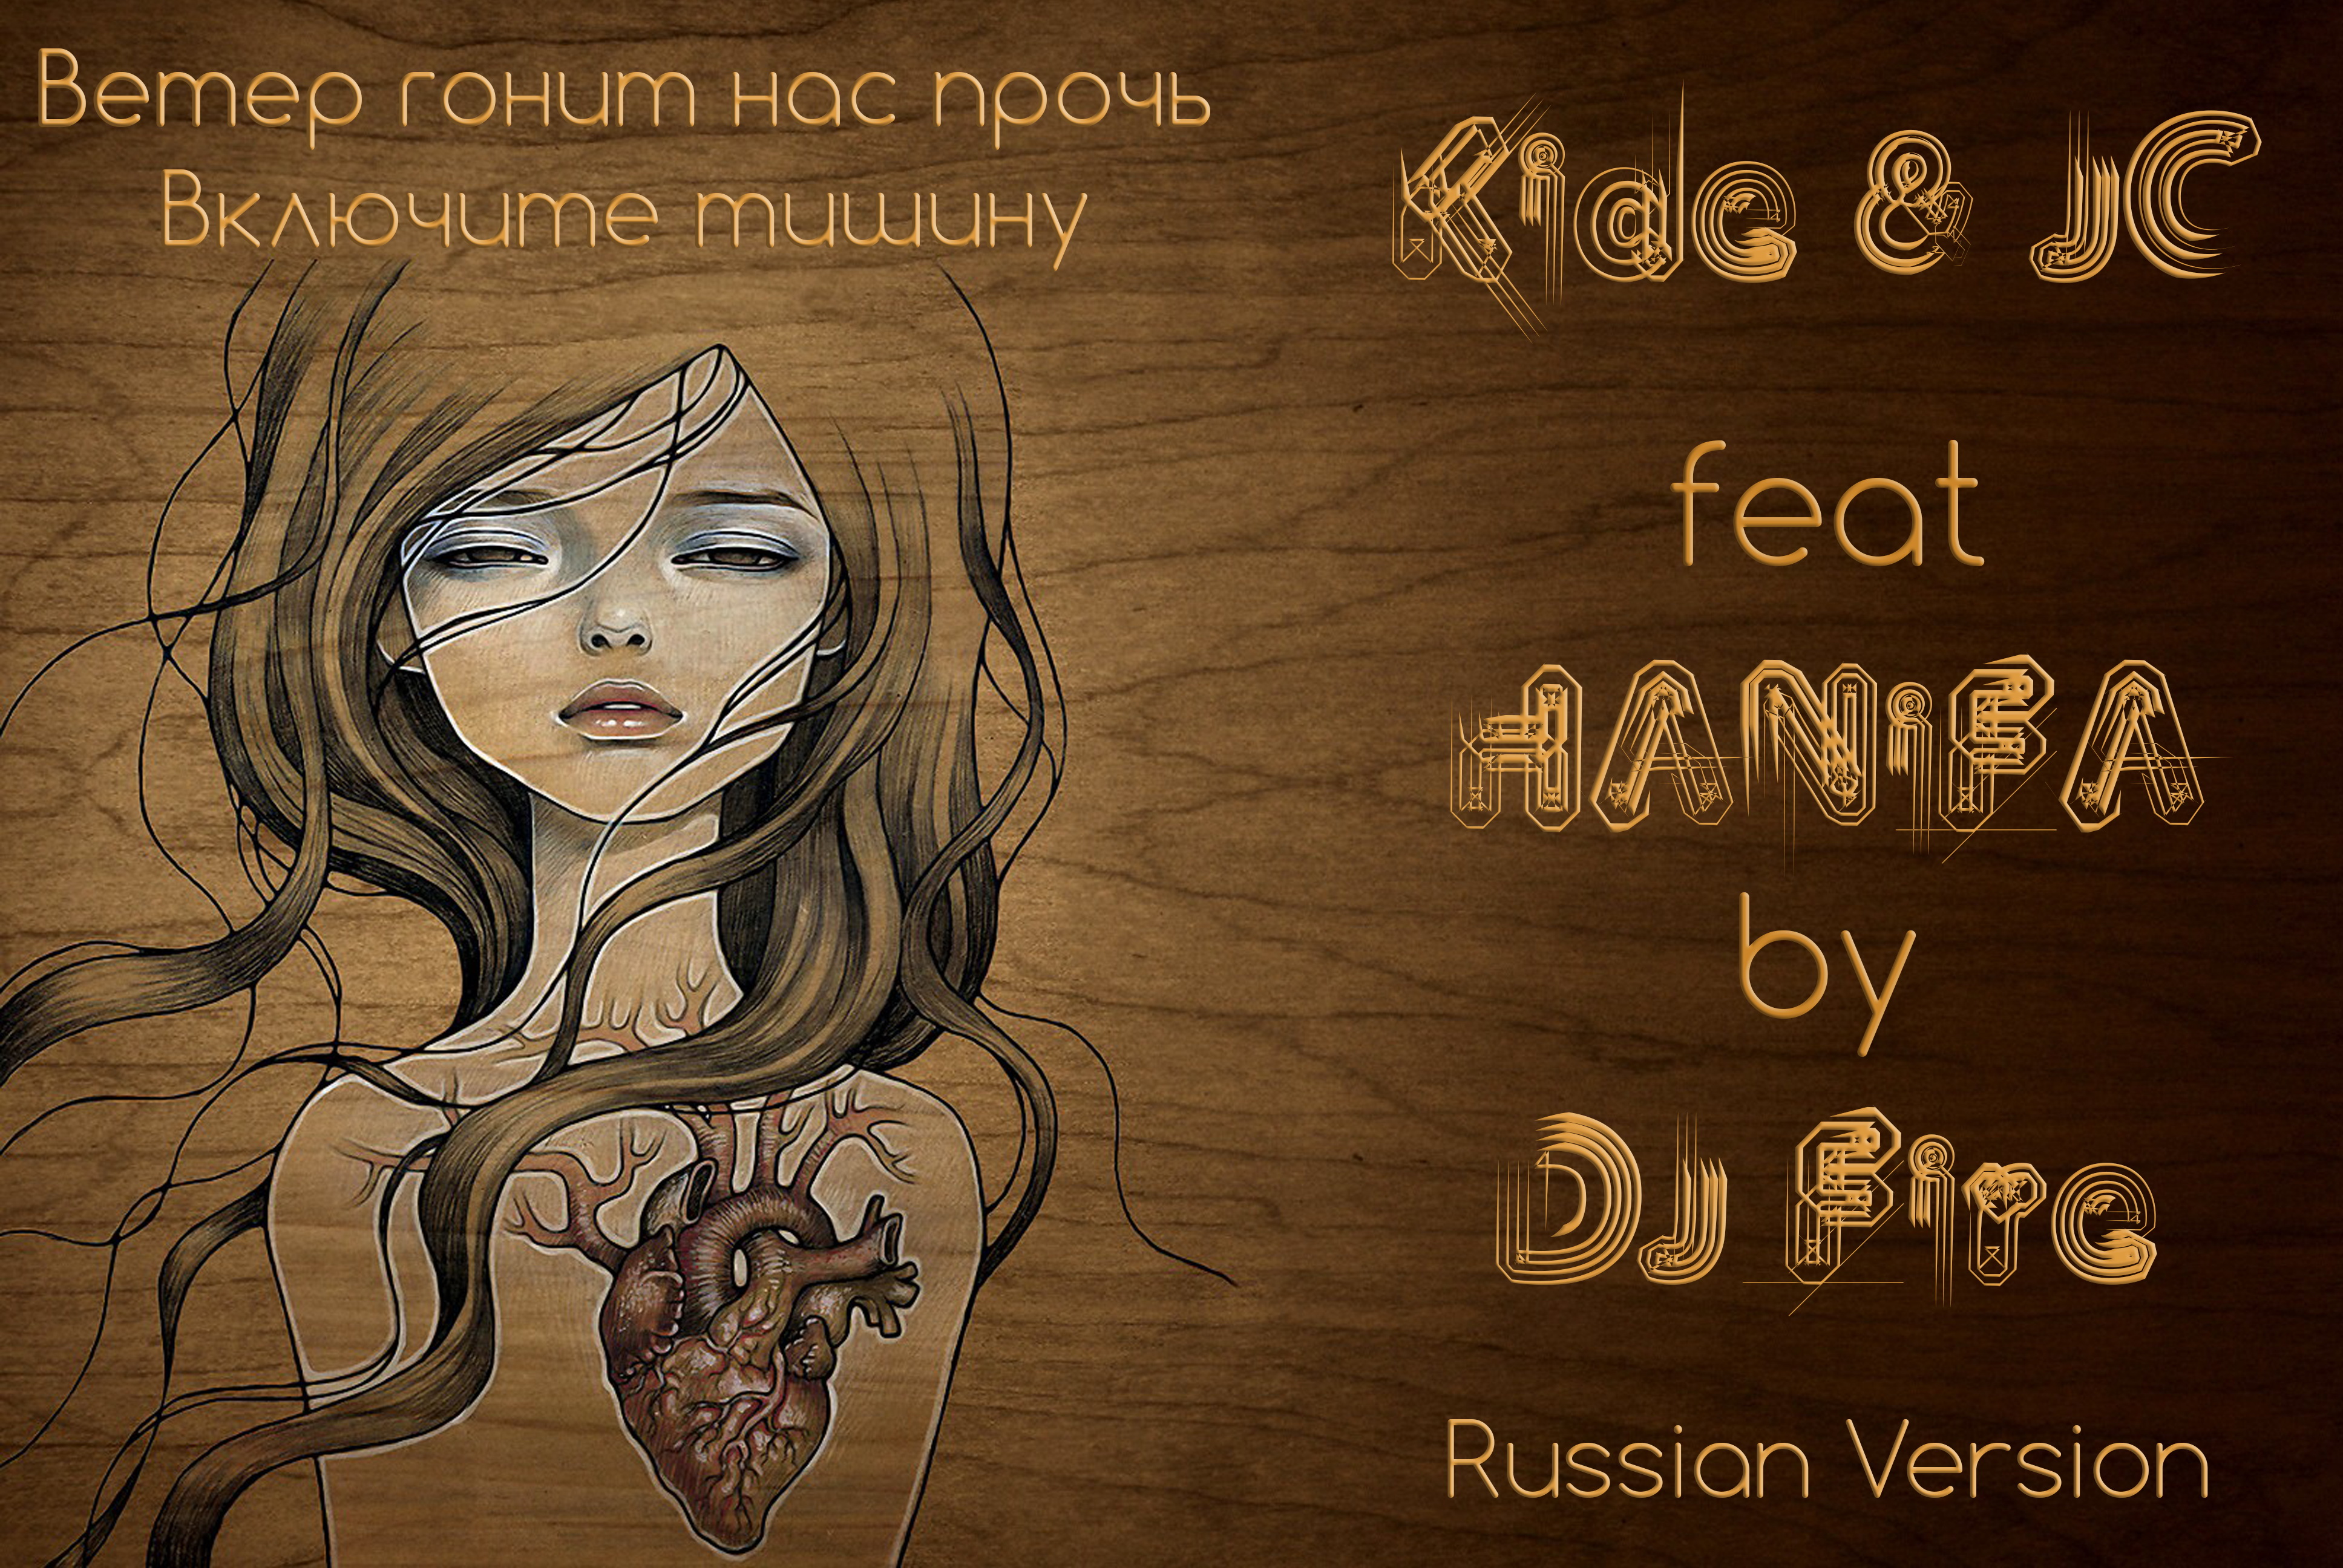 Kide & JC feat HANiFA - by DJ Fire - Ветер гонит нас прочь; Включите тишину - Dance version - RUS